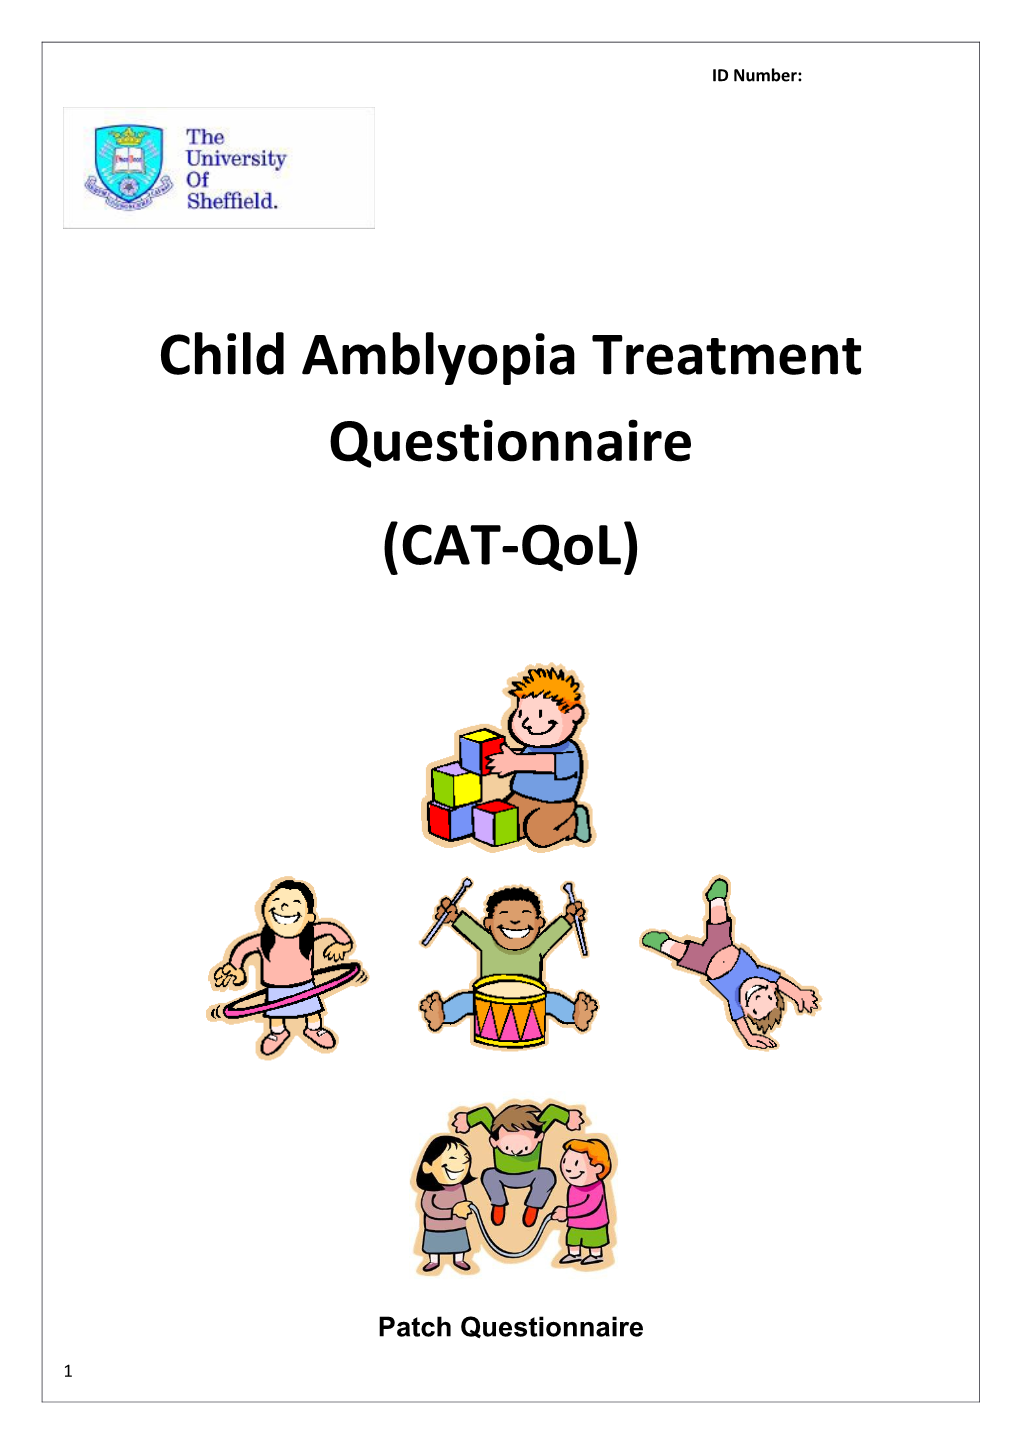 Child Amblyopia Treatment Questionnaire